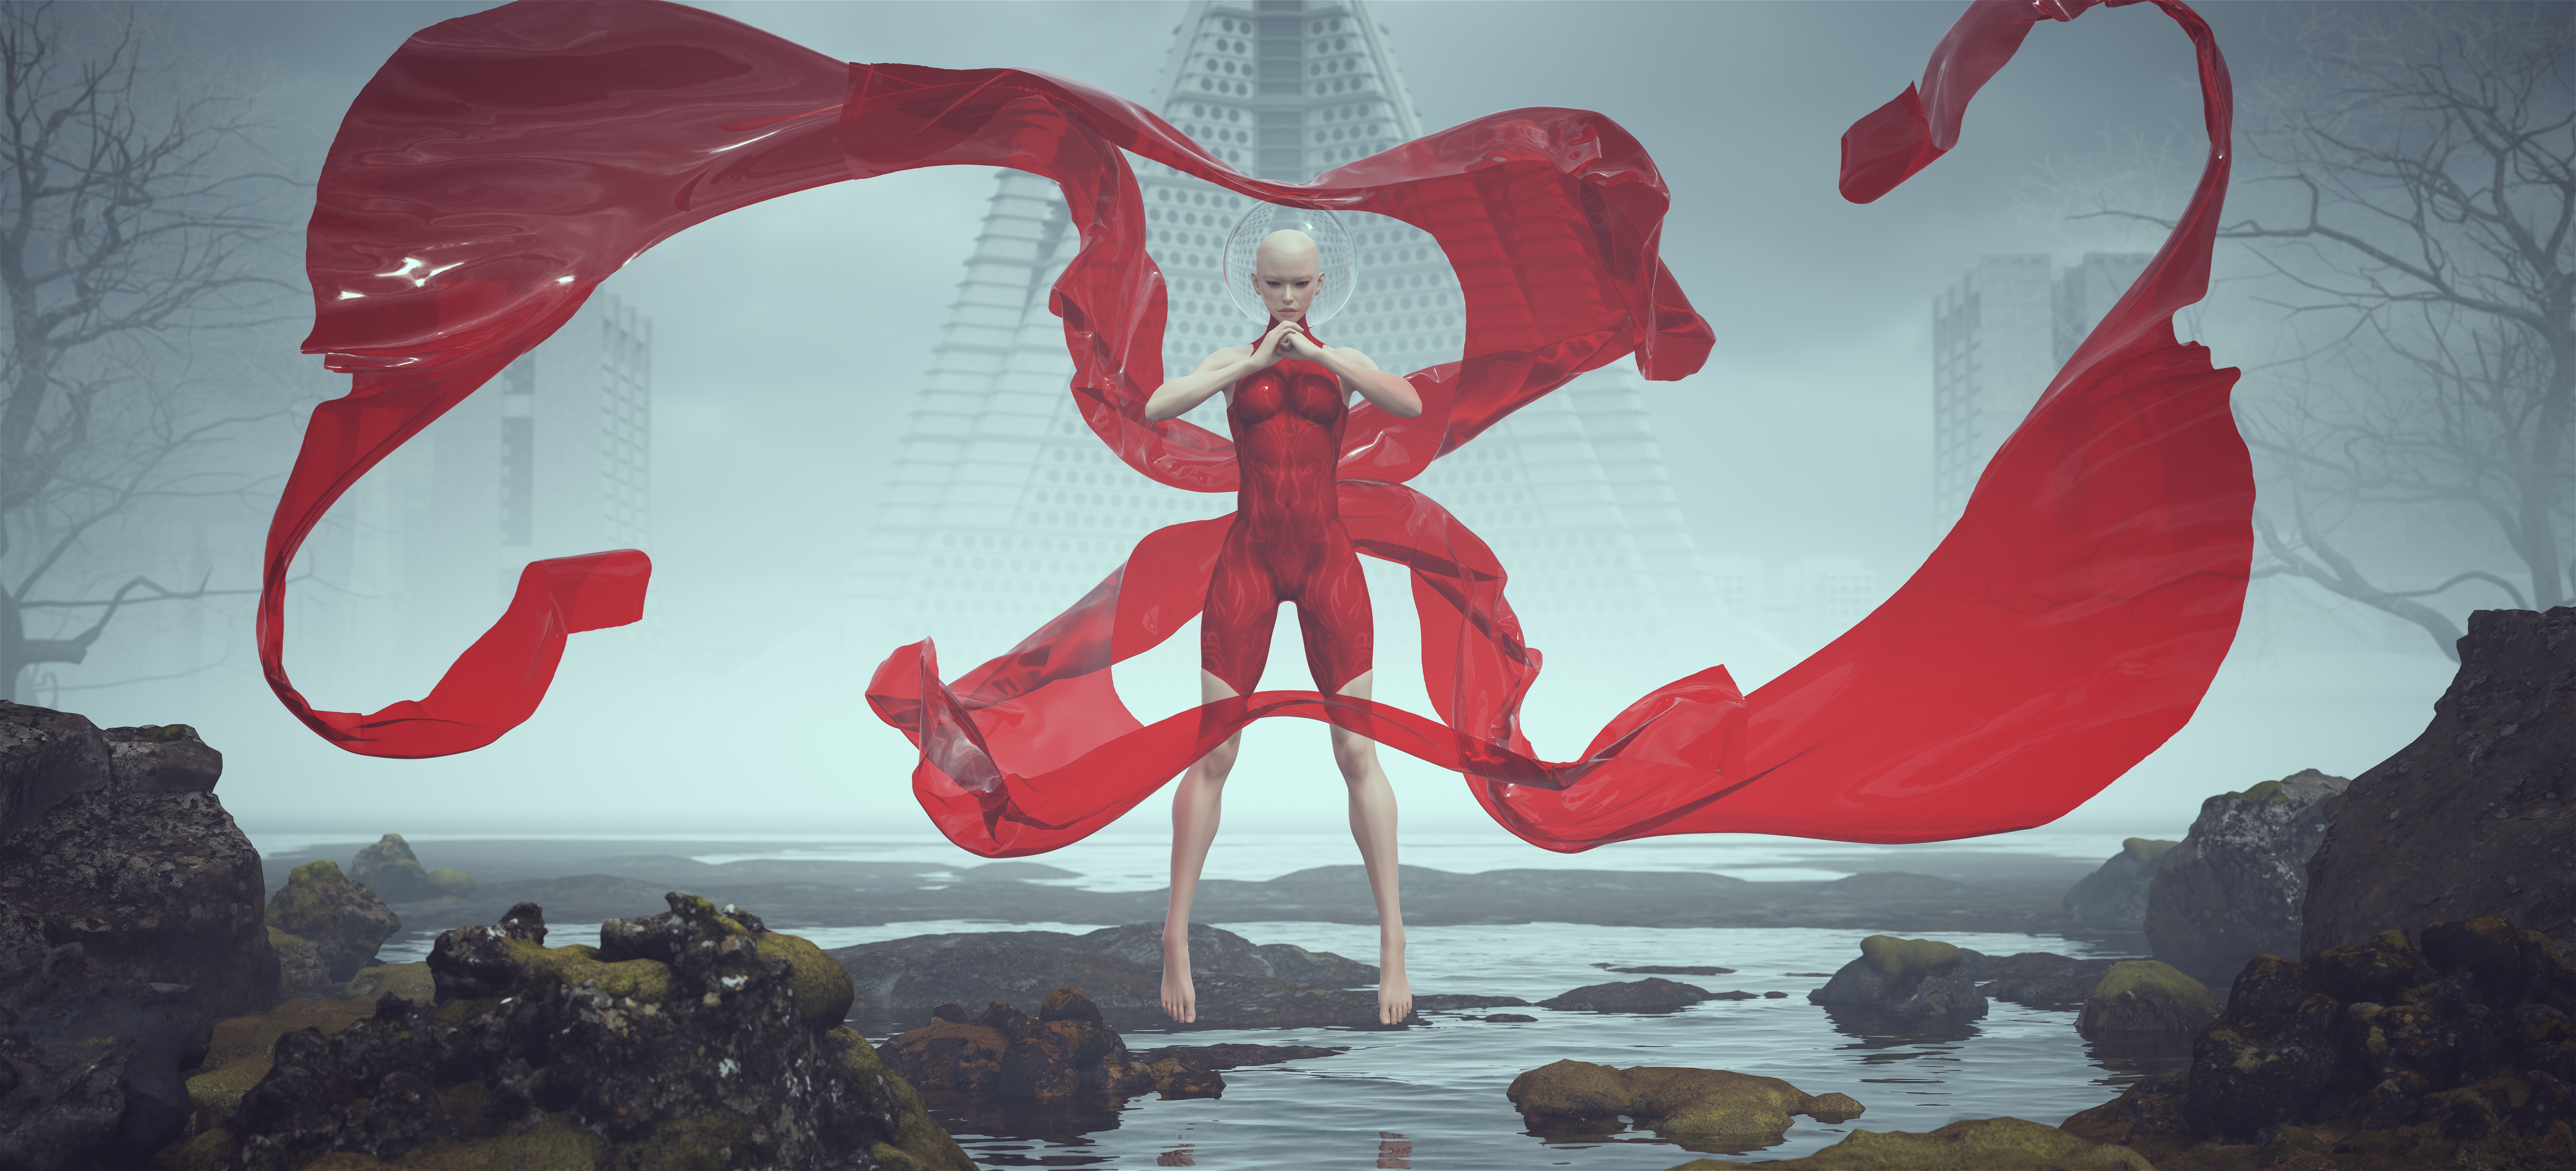 3D Artwork Mist Women Red Clothing Landscape Futuristic River Water Science Fiction City Render Floa 10000x4545